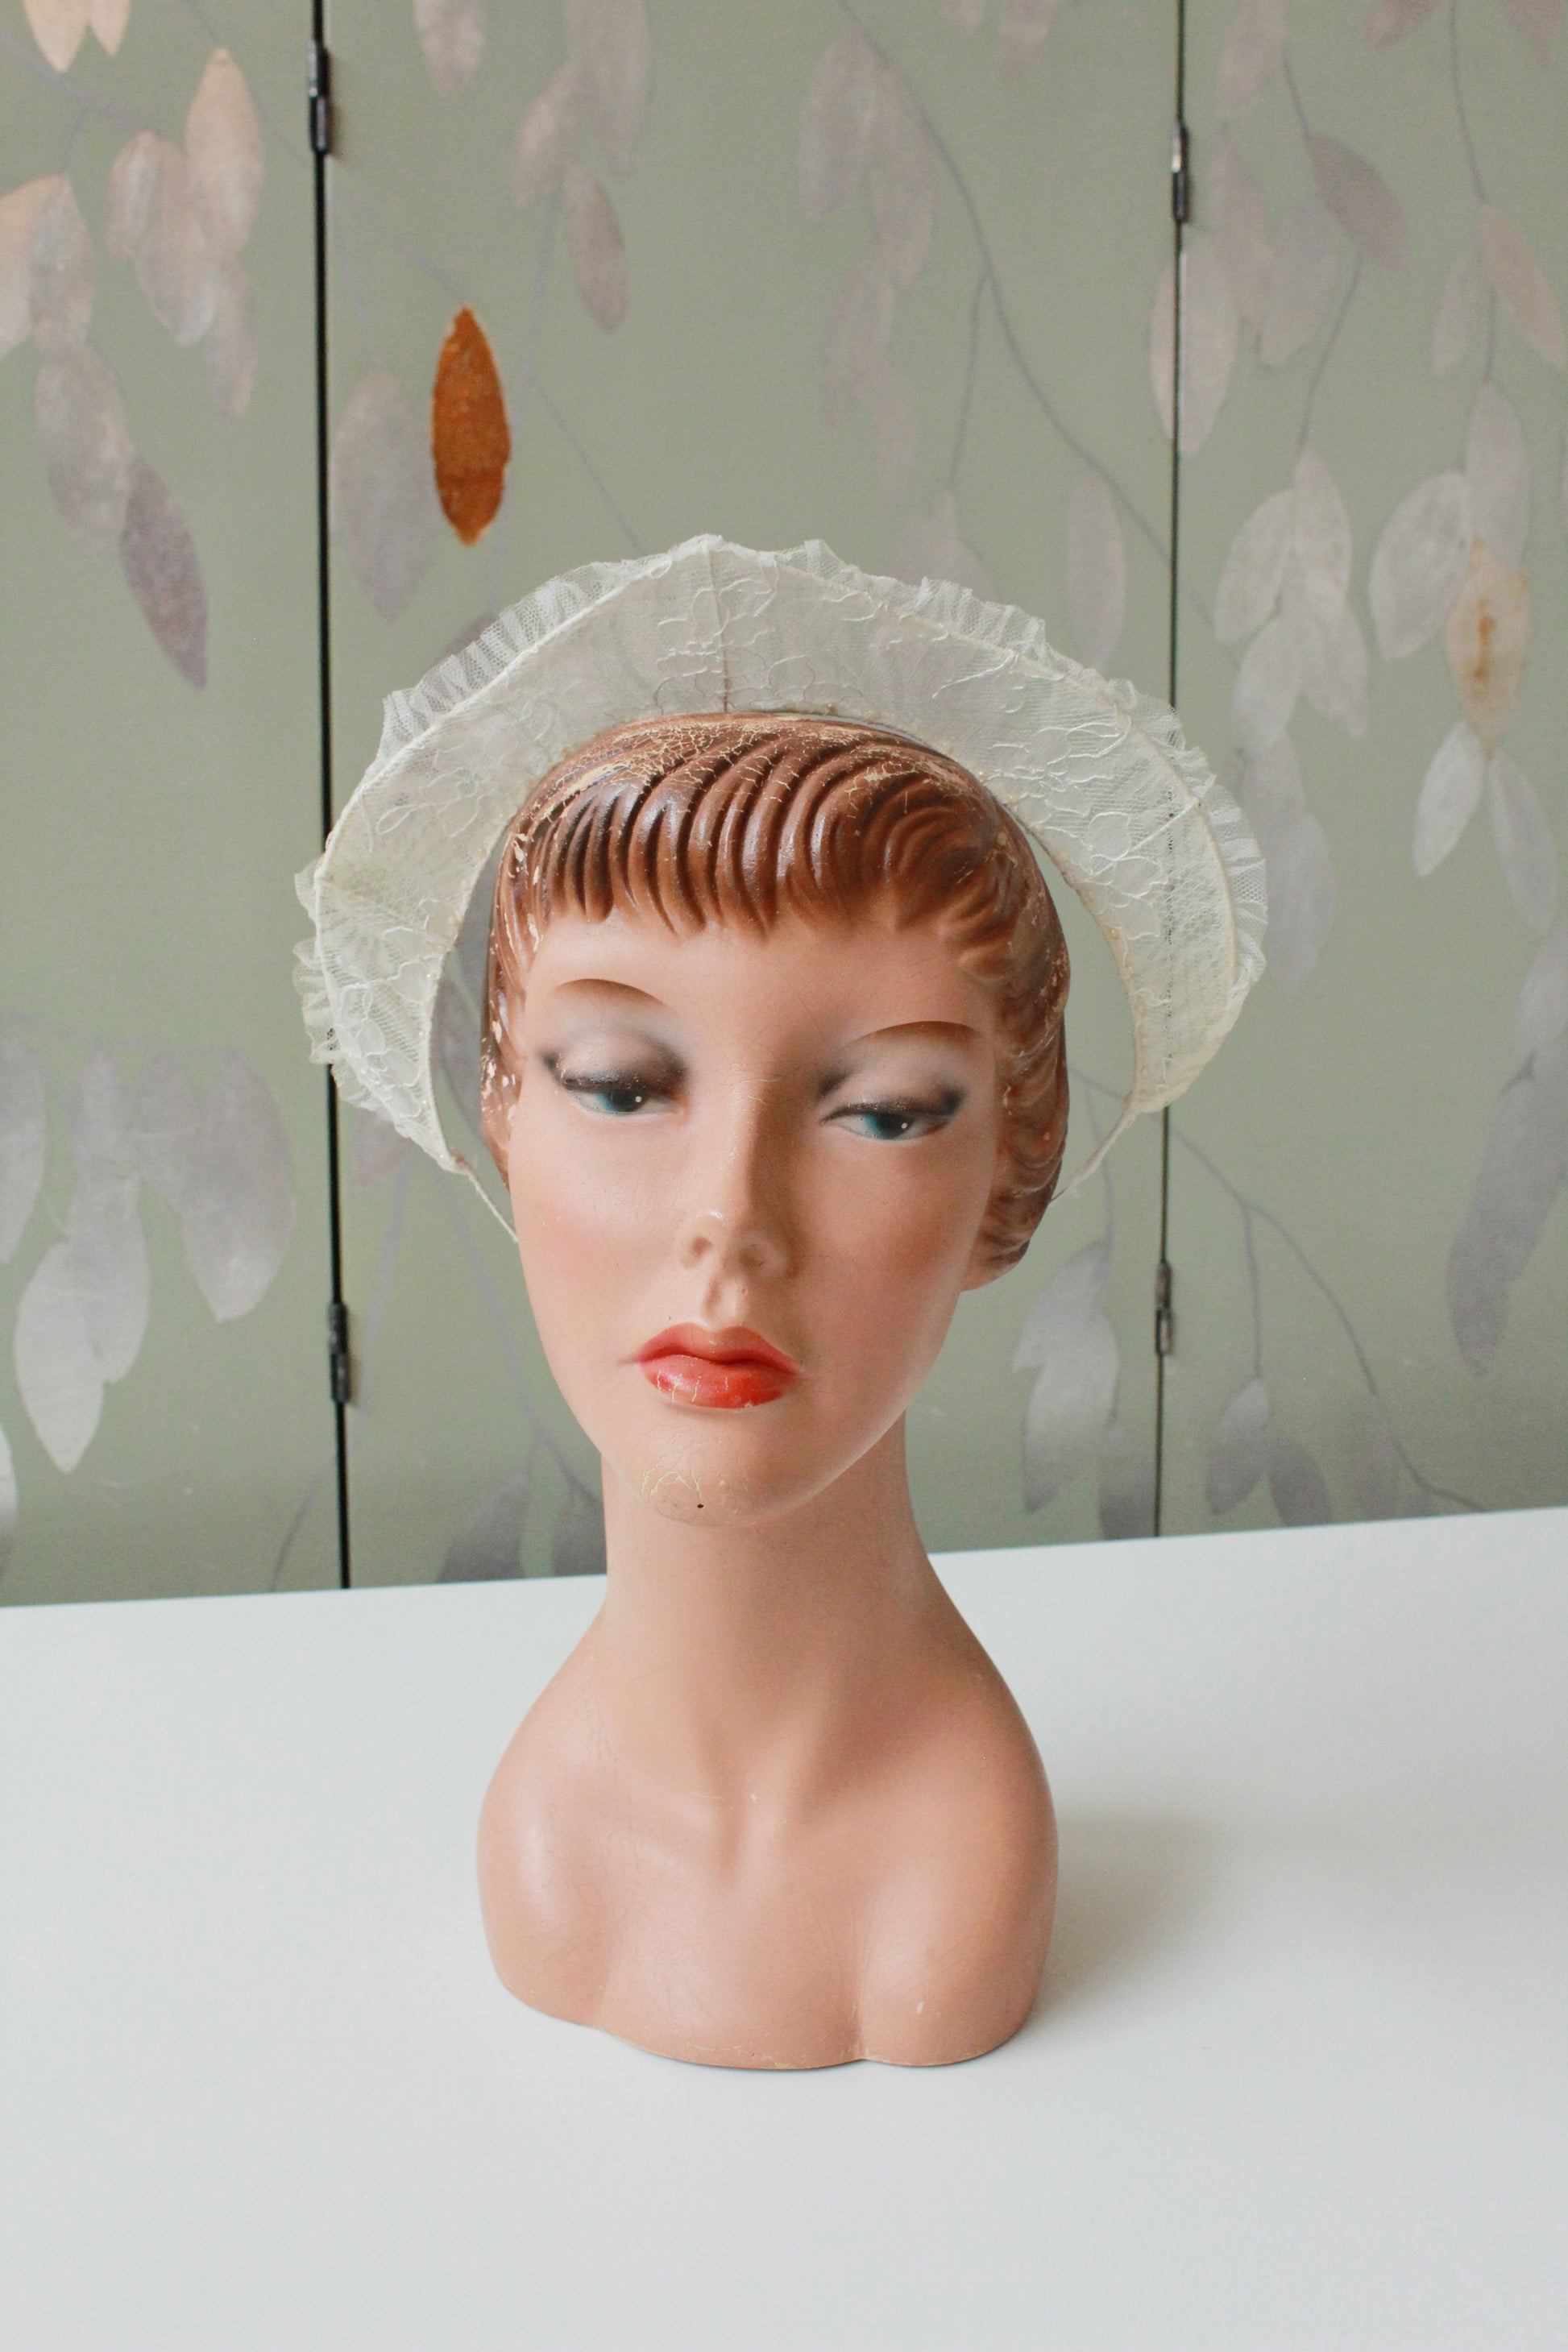 1940s Lace Wedding Headpiece, Vintage Wedding Veil, 1940s Classic Romantic Bride